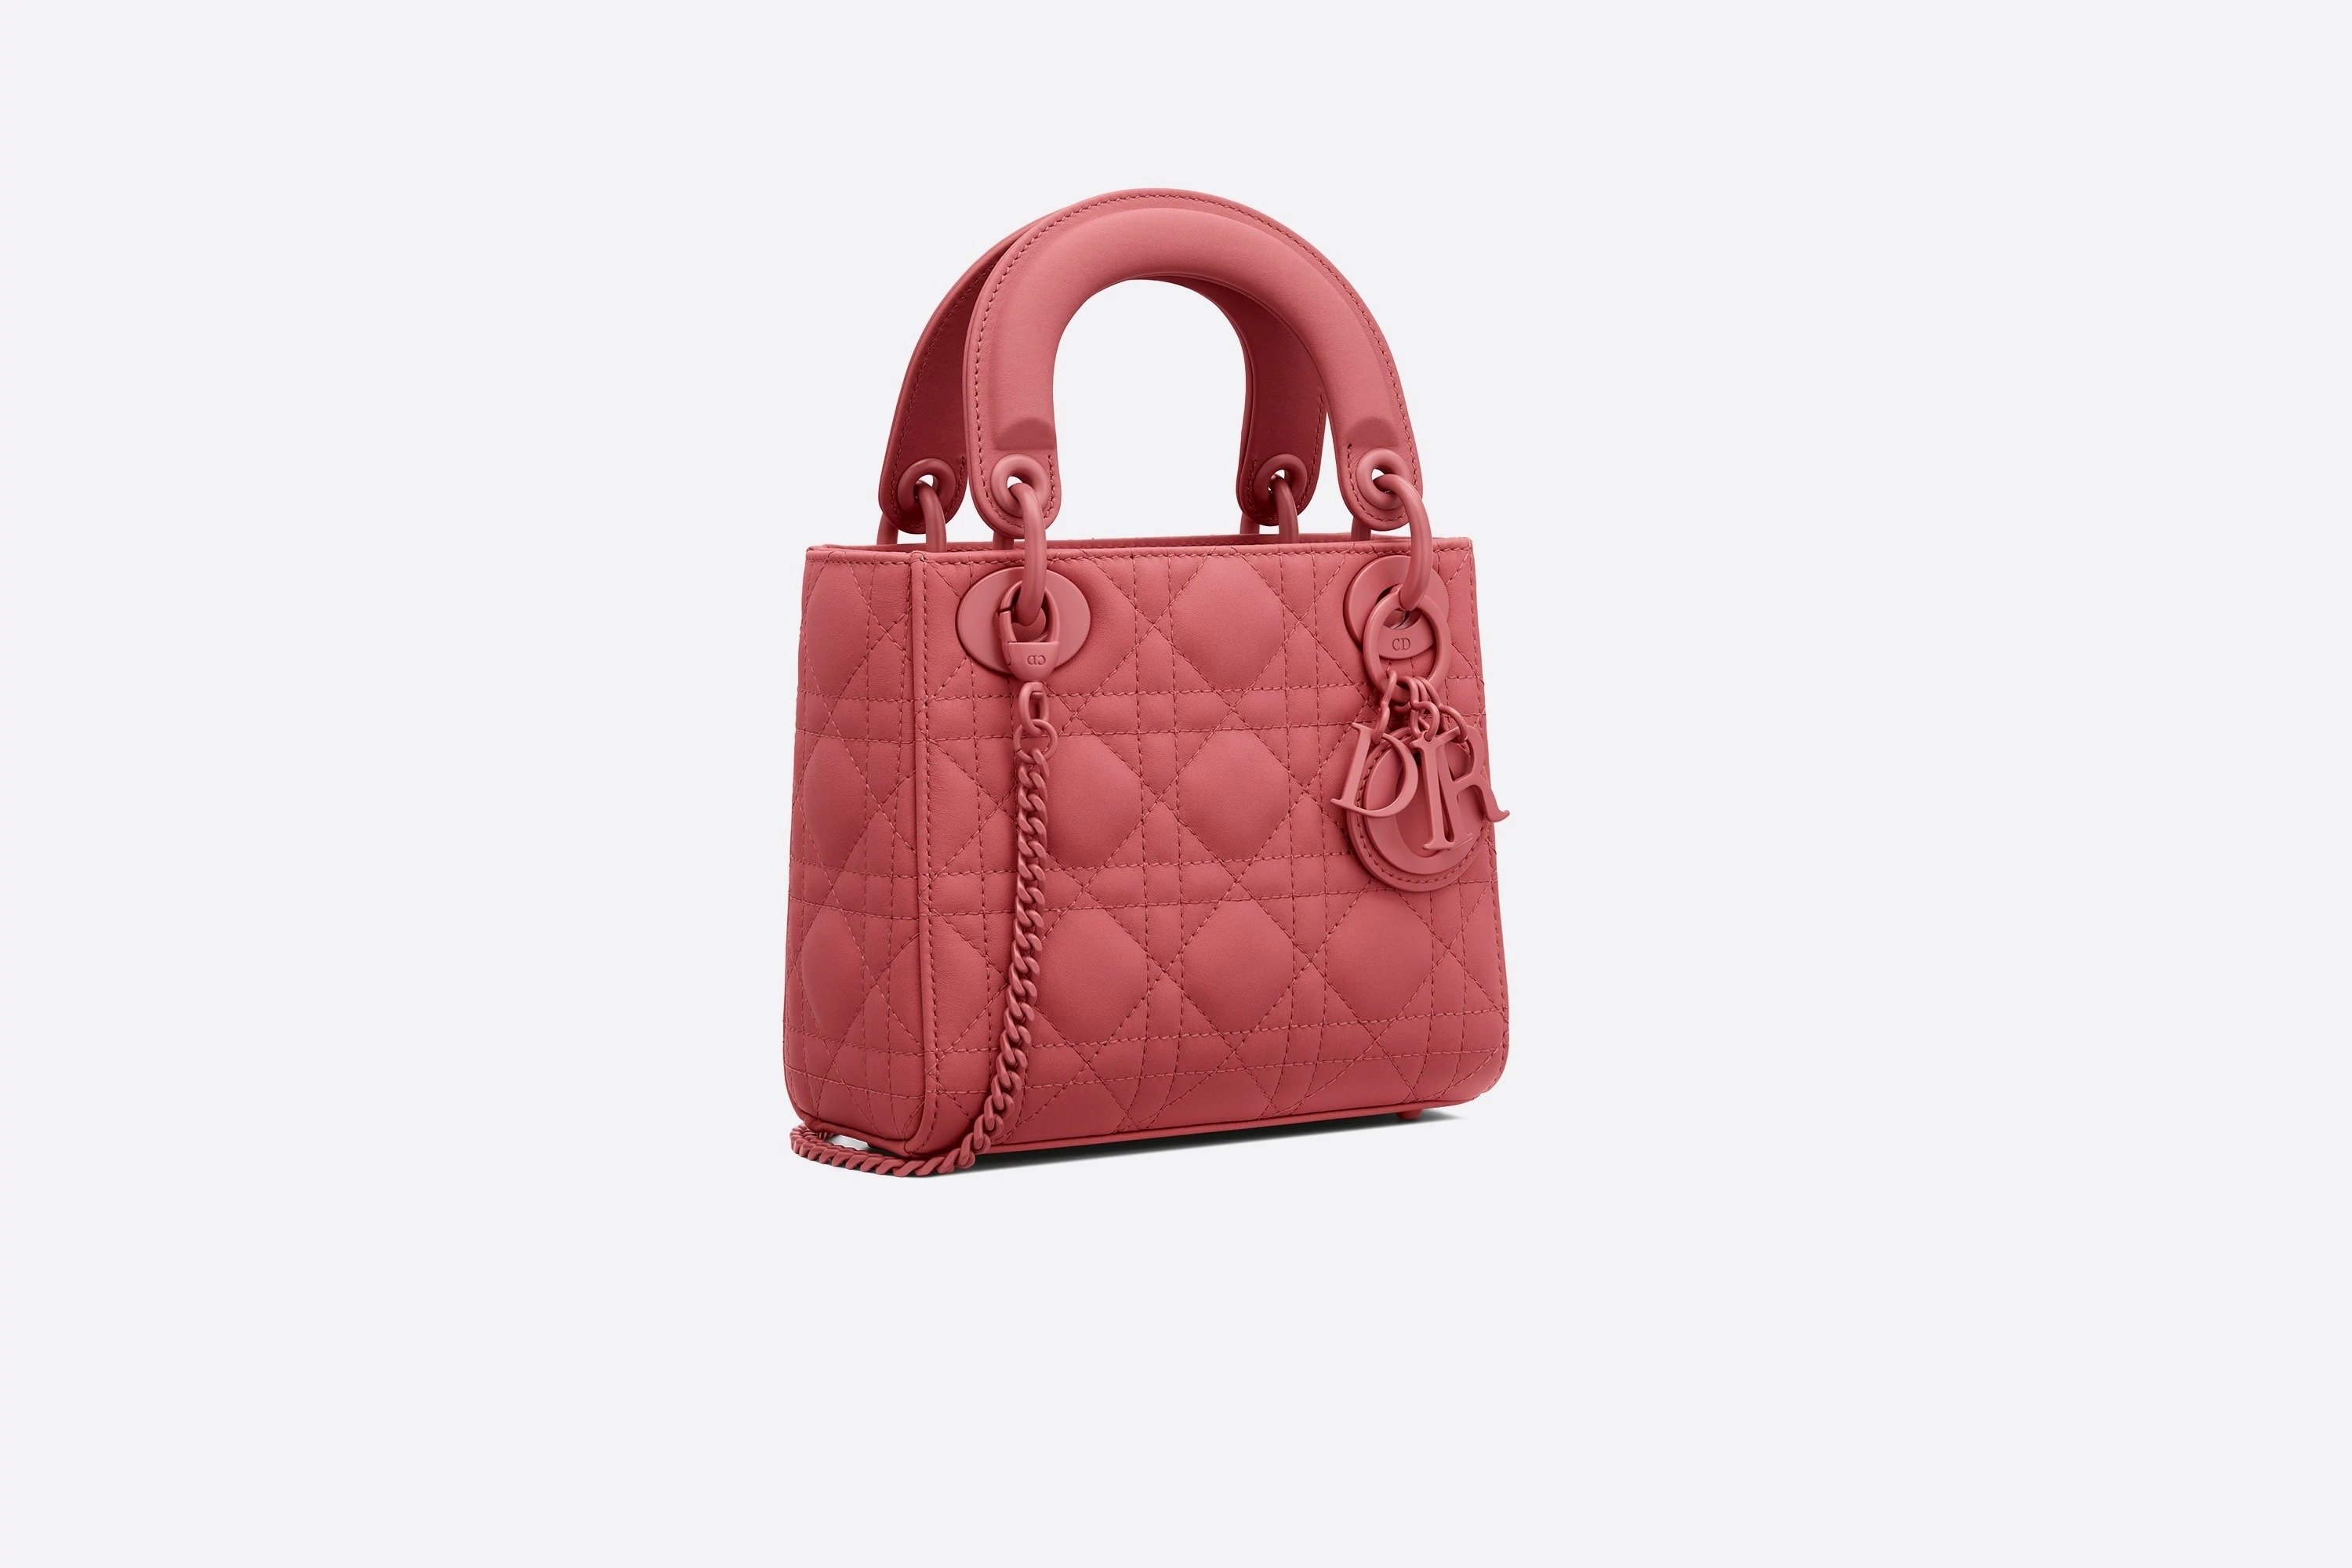 dior-2020-ultra-matte-handbags-saddle-bag-lady-dior-30-montaigne